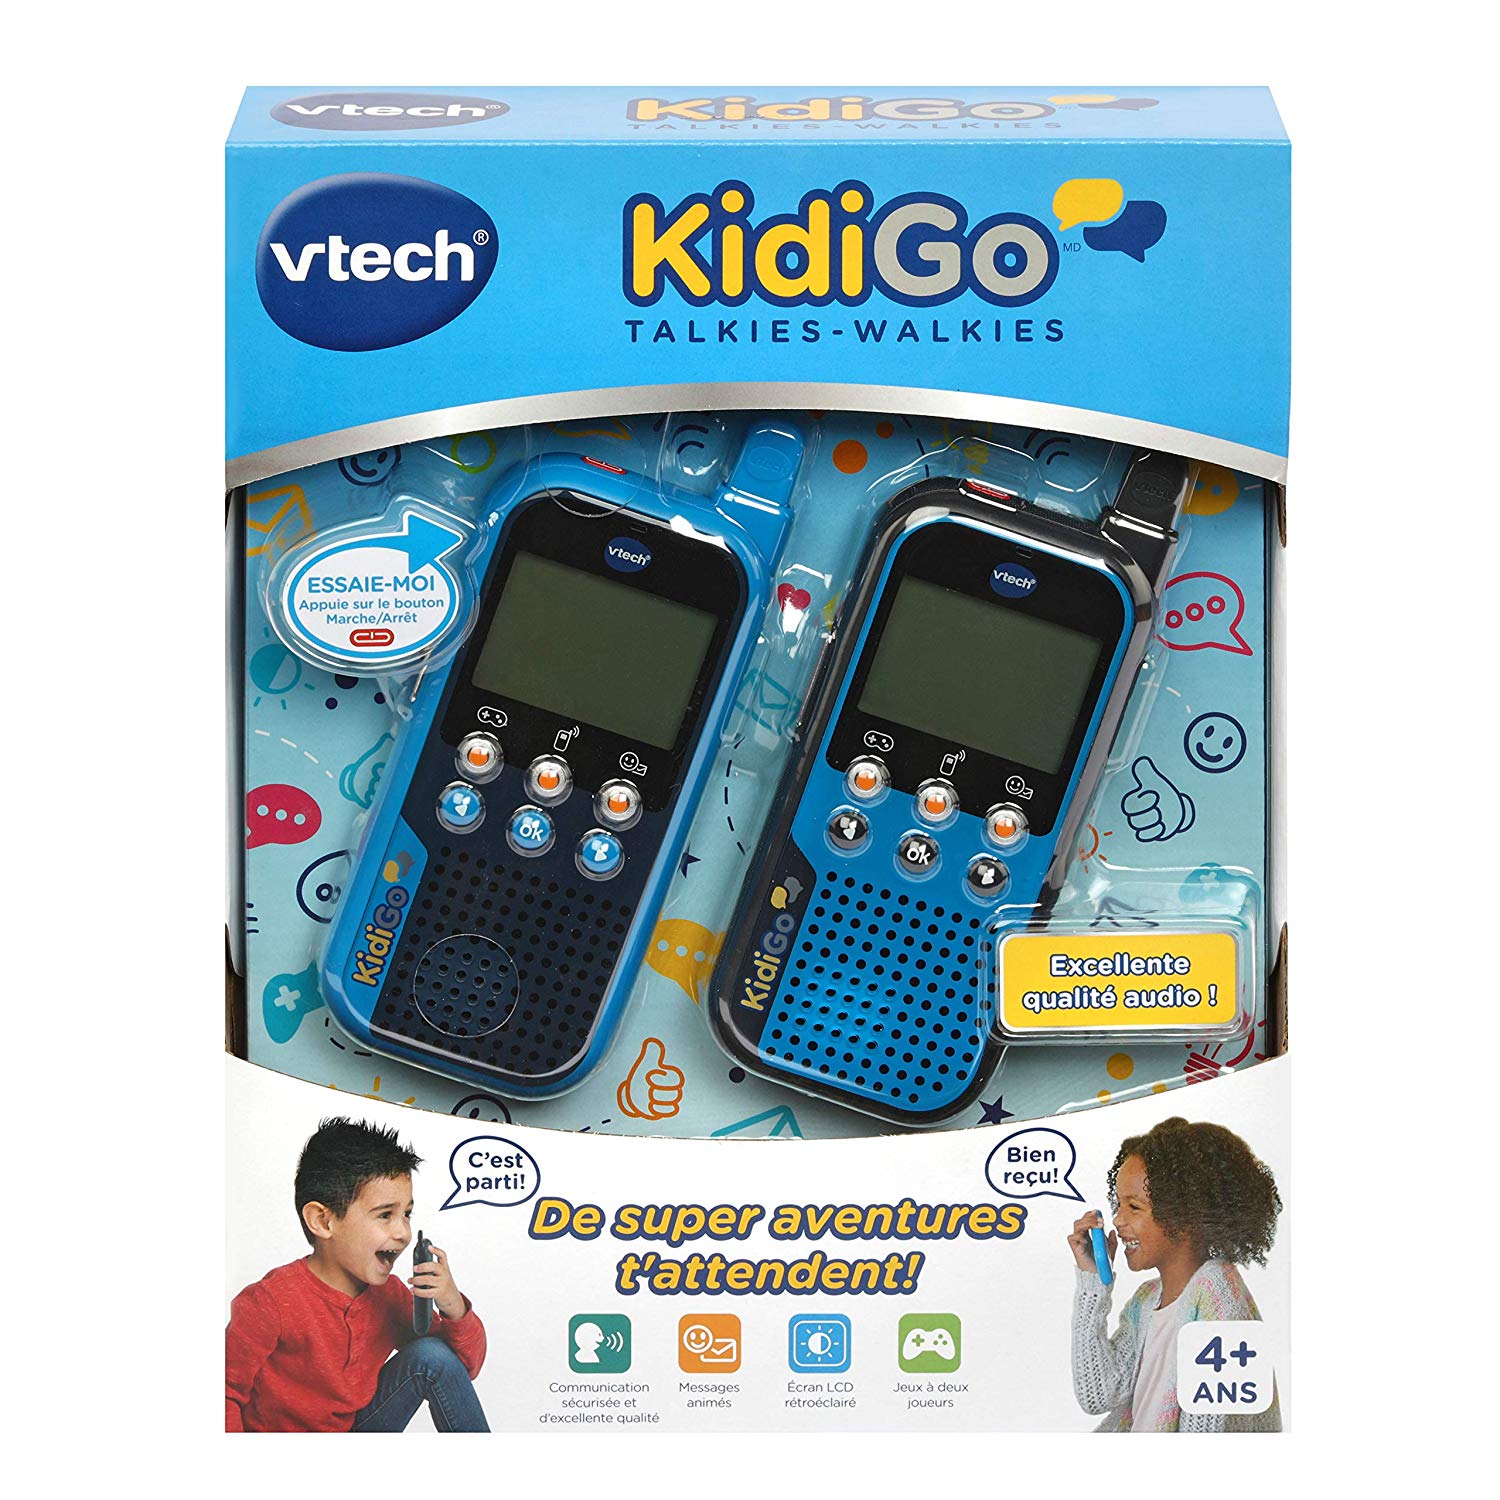 Kidi Go talkies walkies